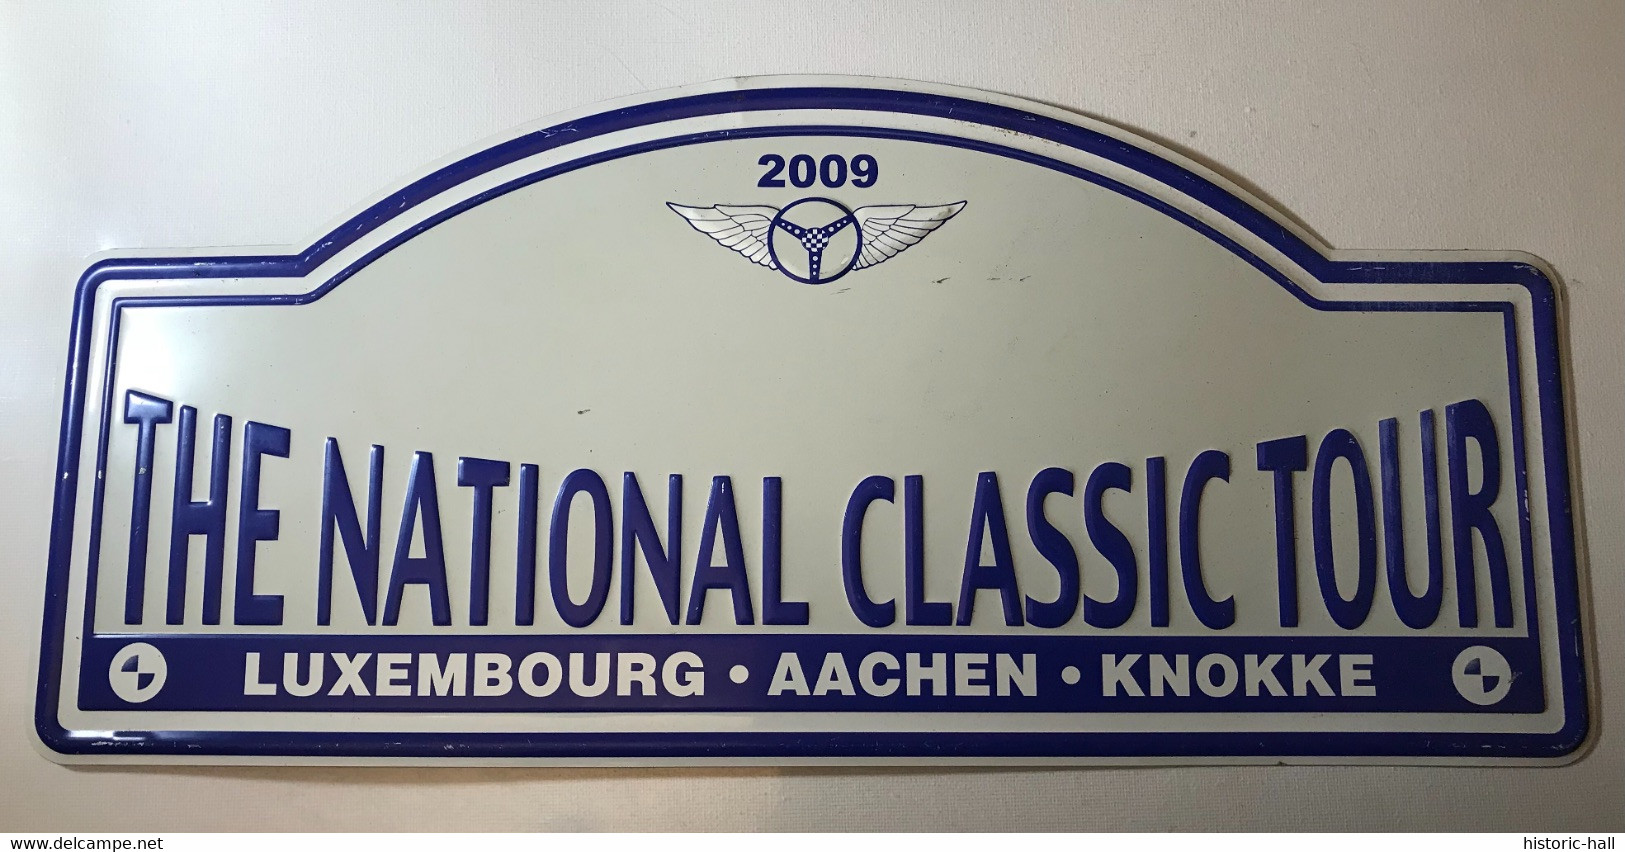 Plaque RALLYE - 2009 - THE NATIONAL CLASSIC TOUR - LUXEMBOURG . AACHEN . KNOKKE - Rallye (Rally) Plates